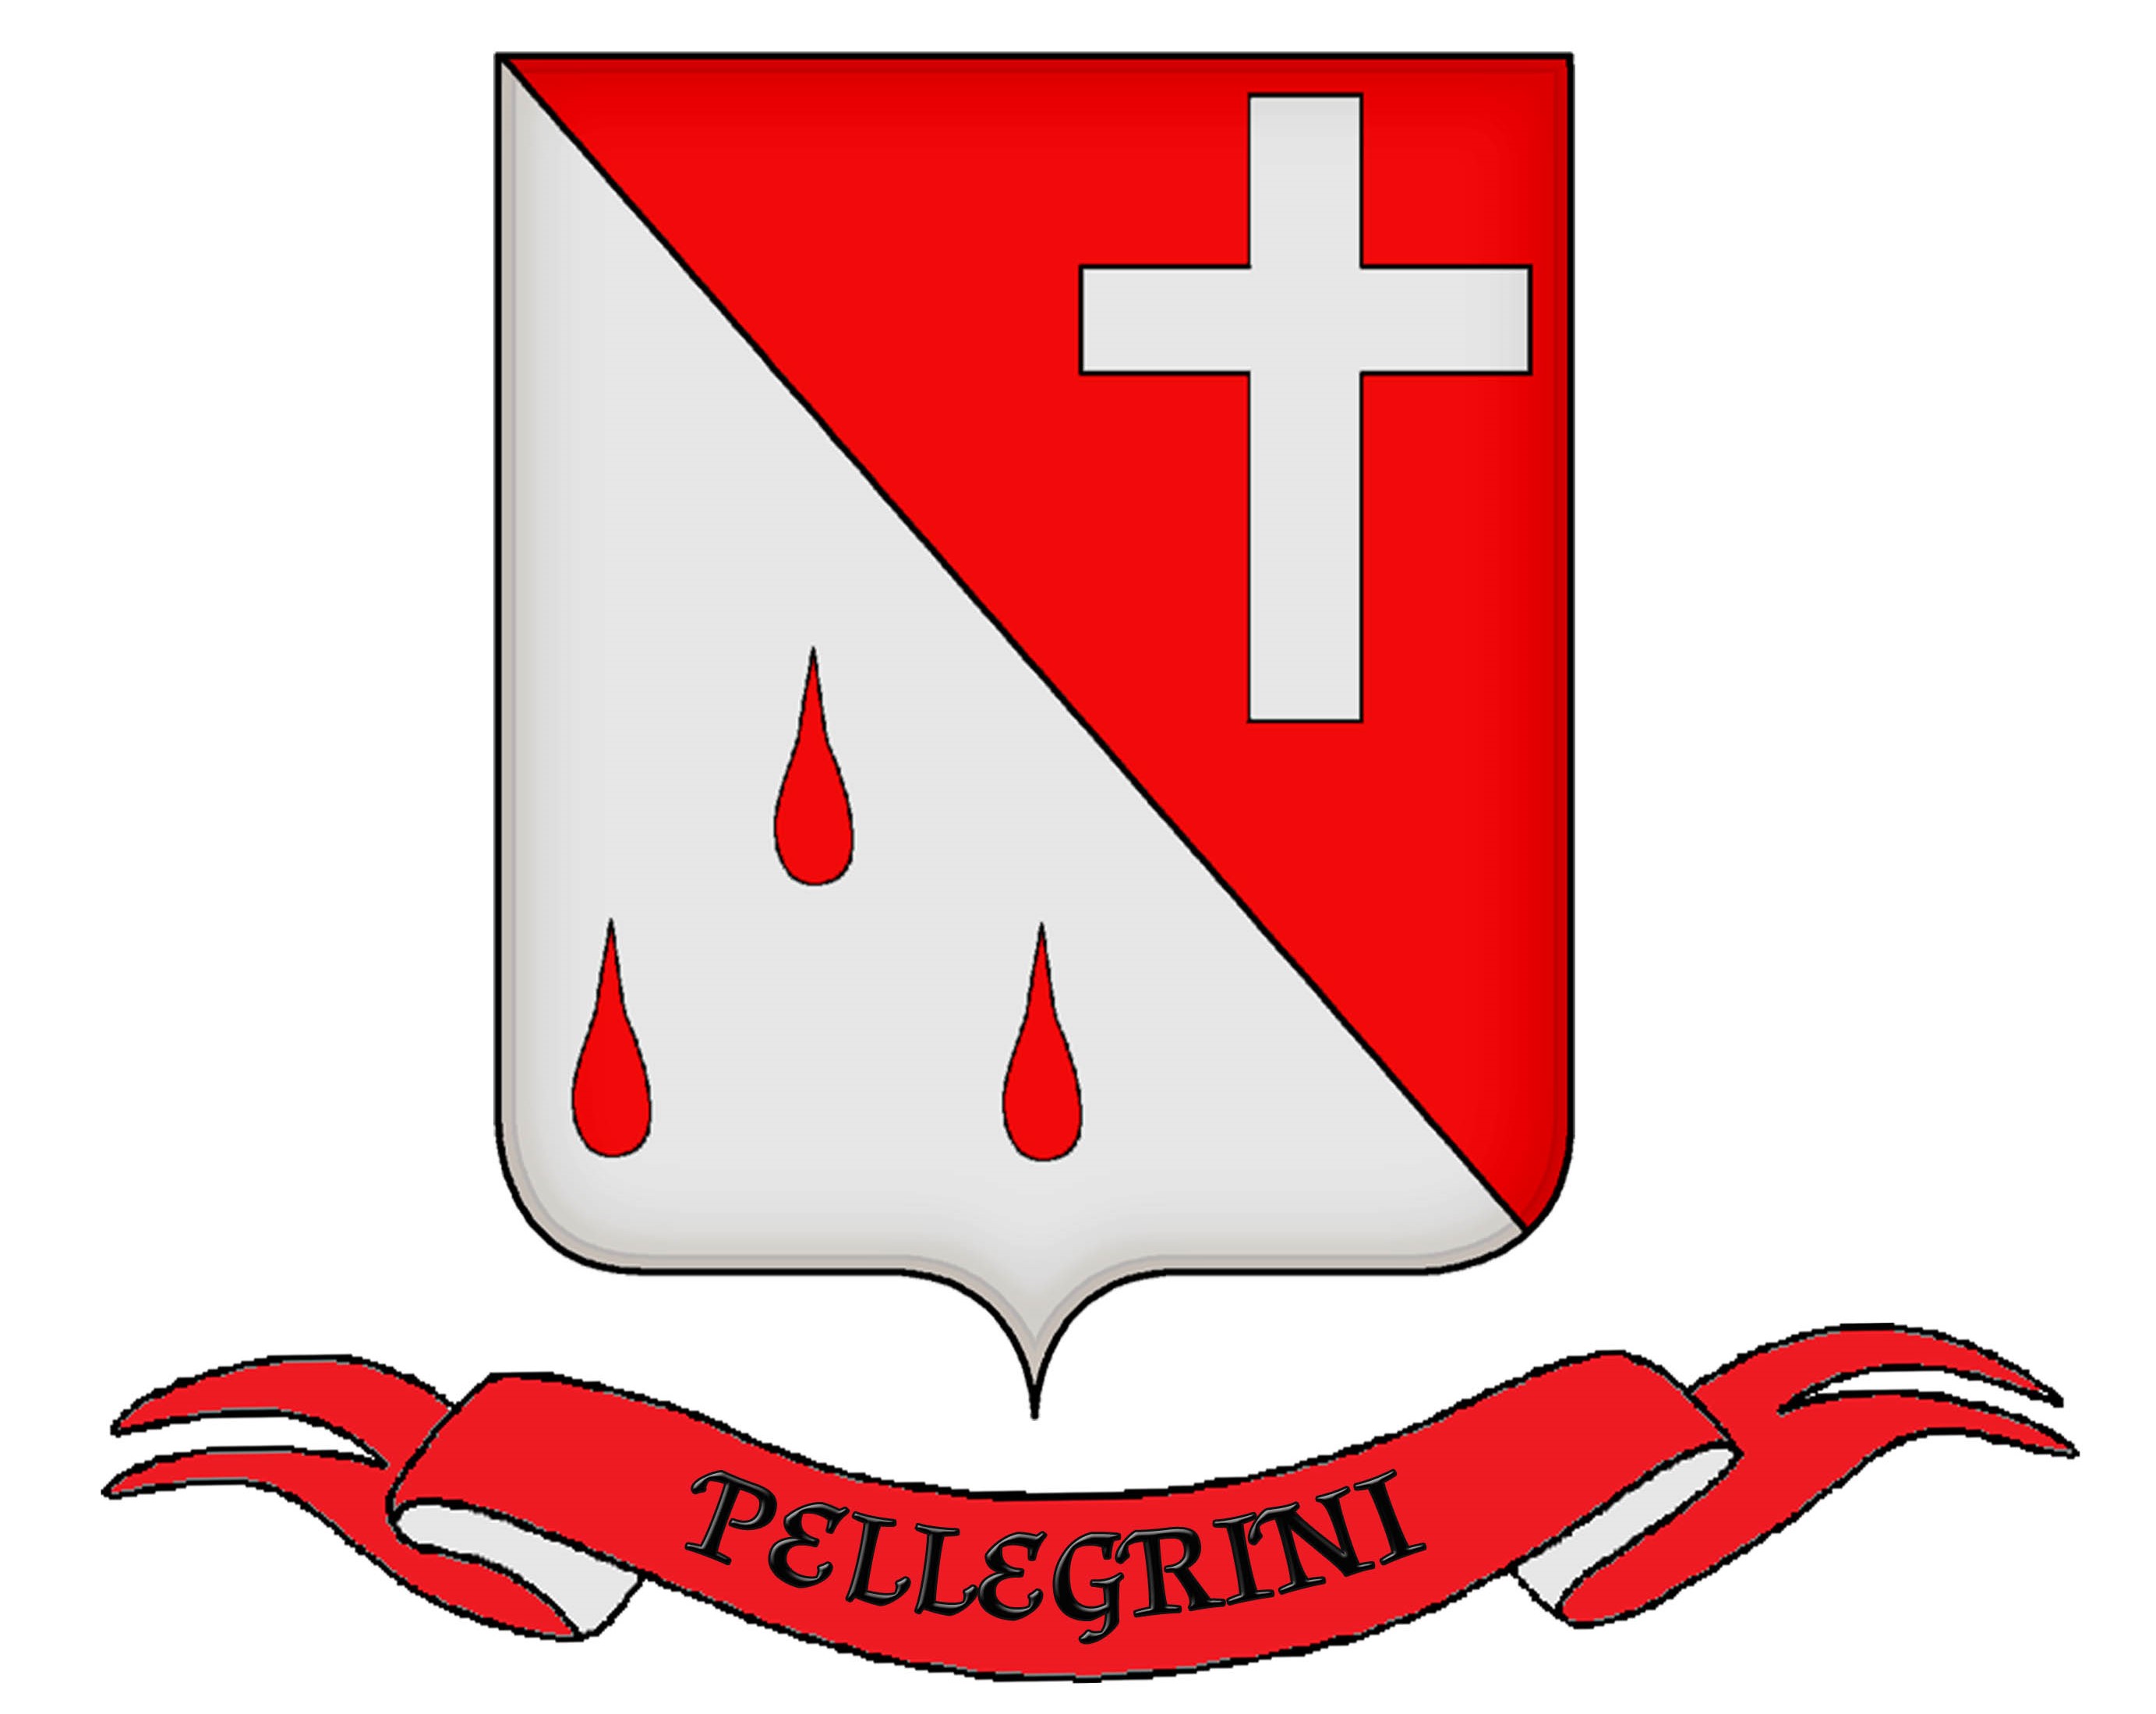 Pellegrini Carlo